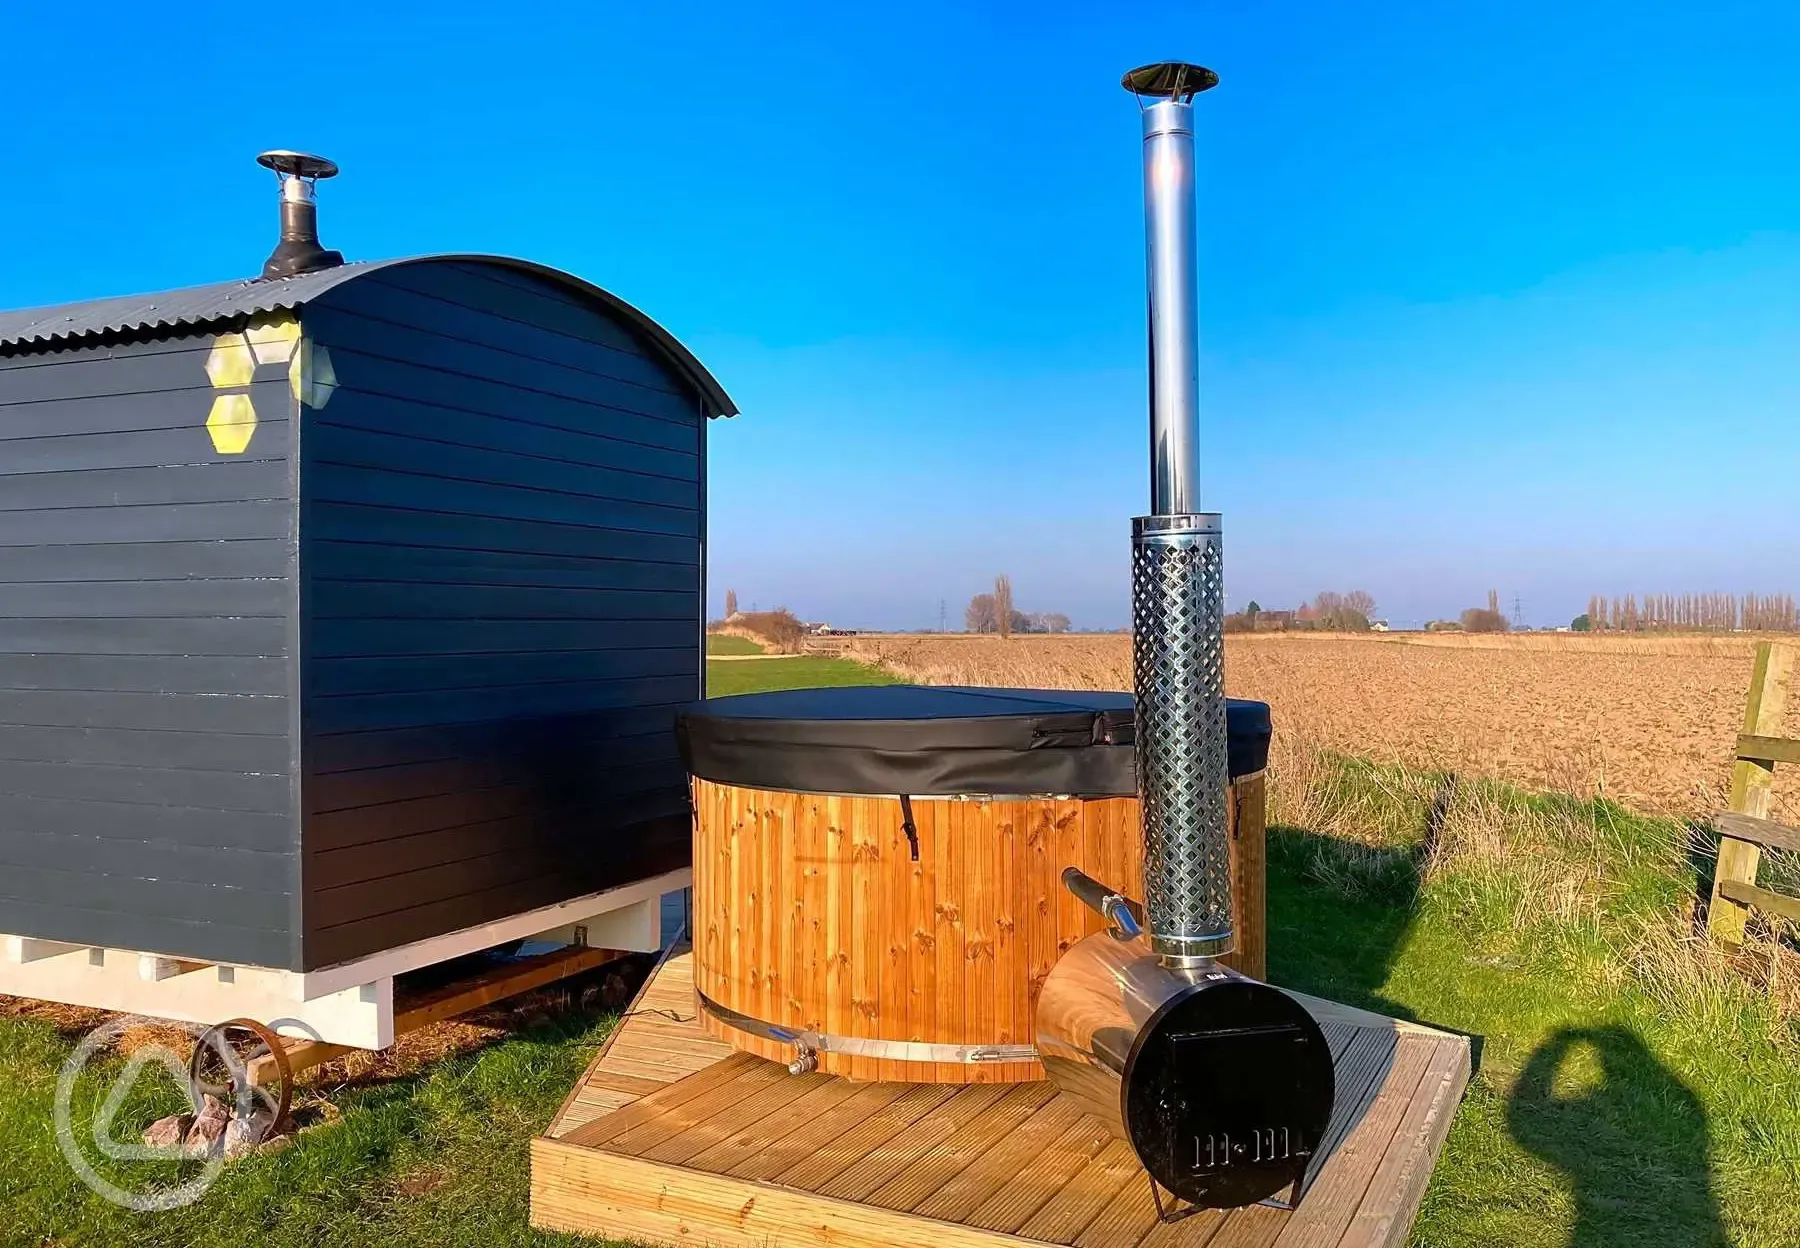 Bumble shepherd's hut hot tub